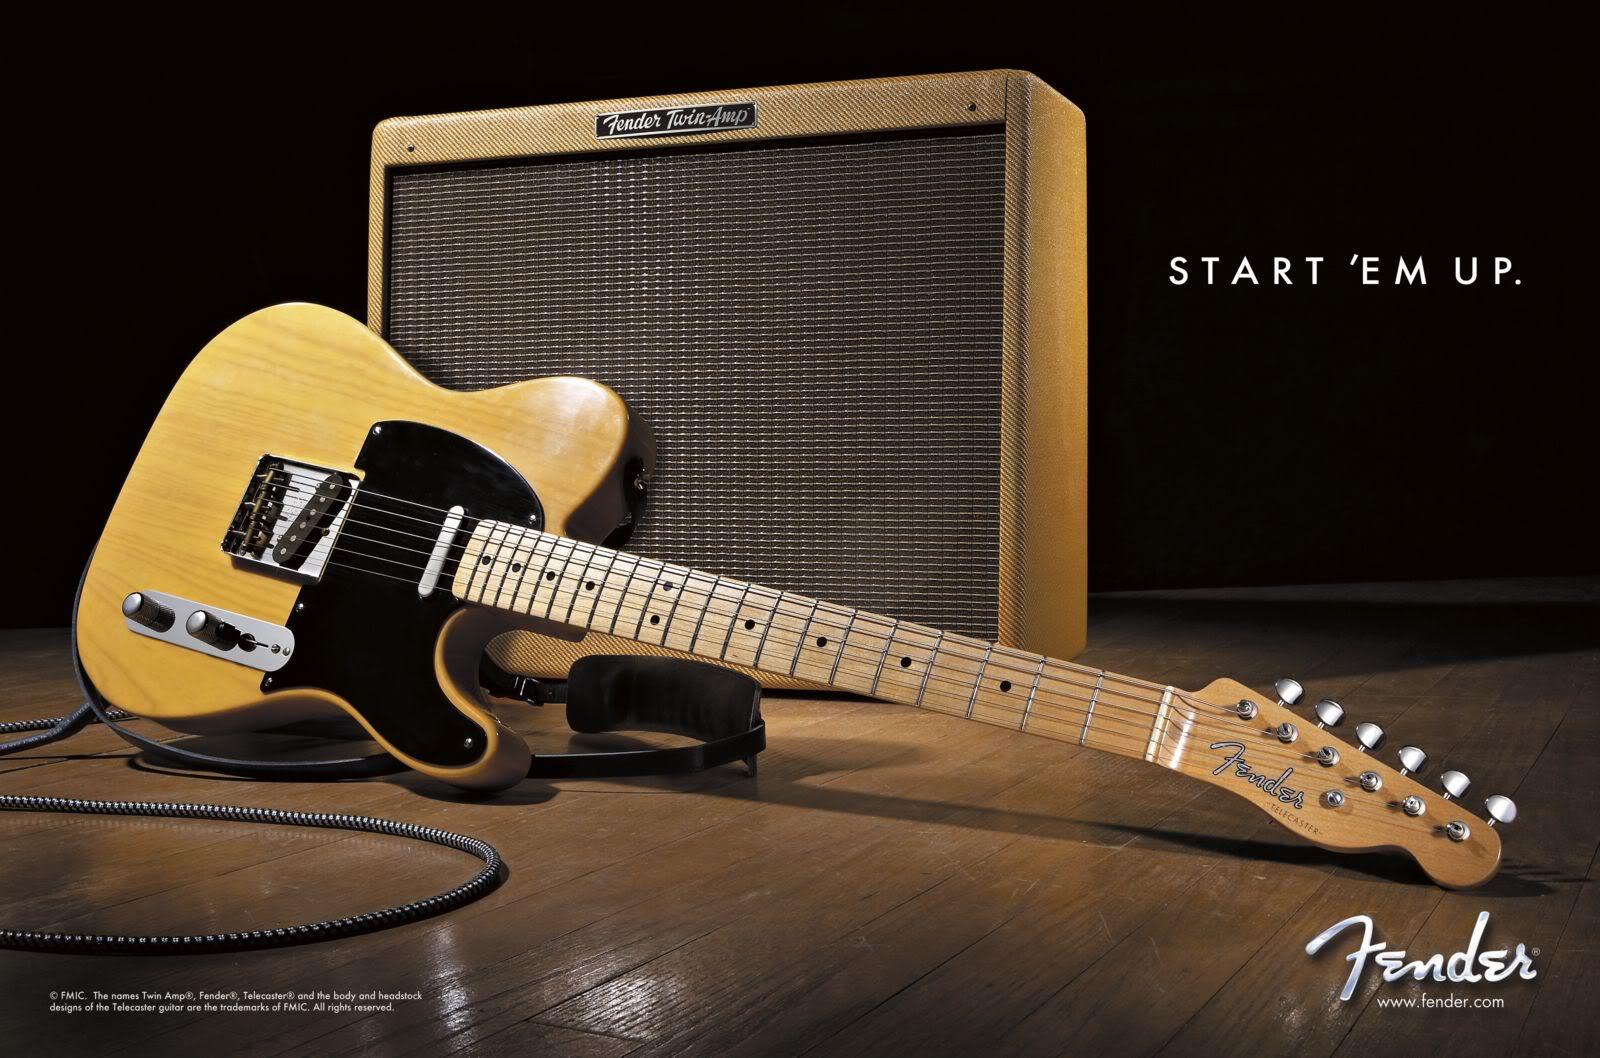 Fender guitars image Fender telecaster HD wallpaper and background